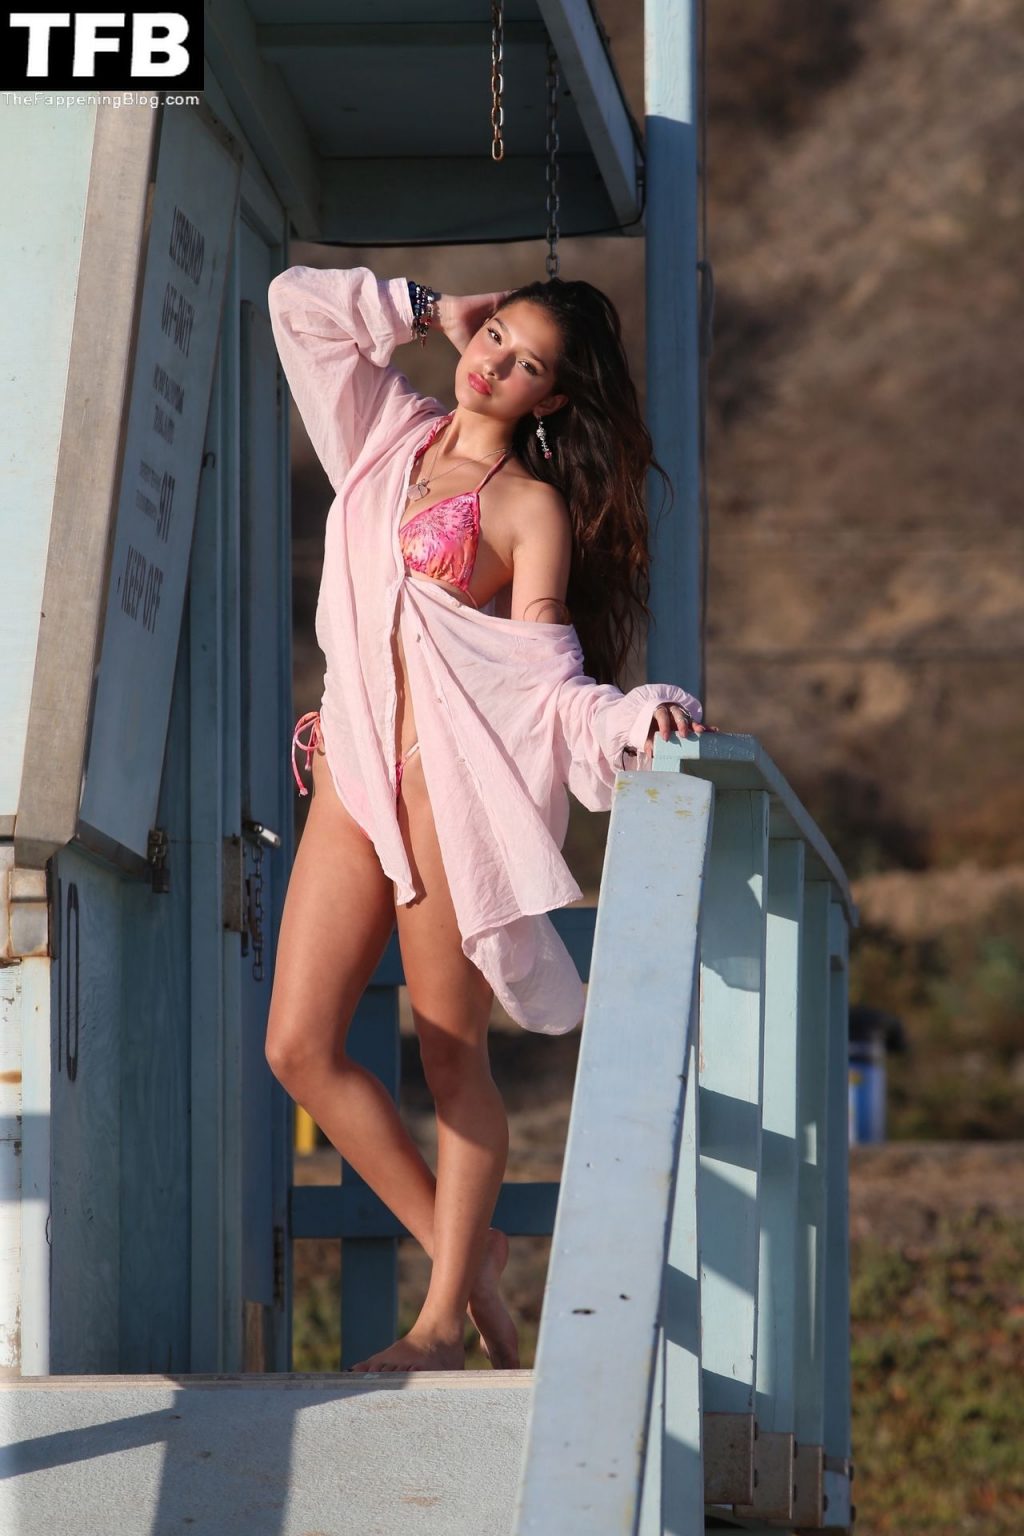 Manuela Perez Poses in a Sexy Pink Bikini on the Beach (16 Photos)